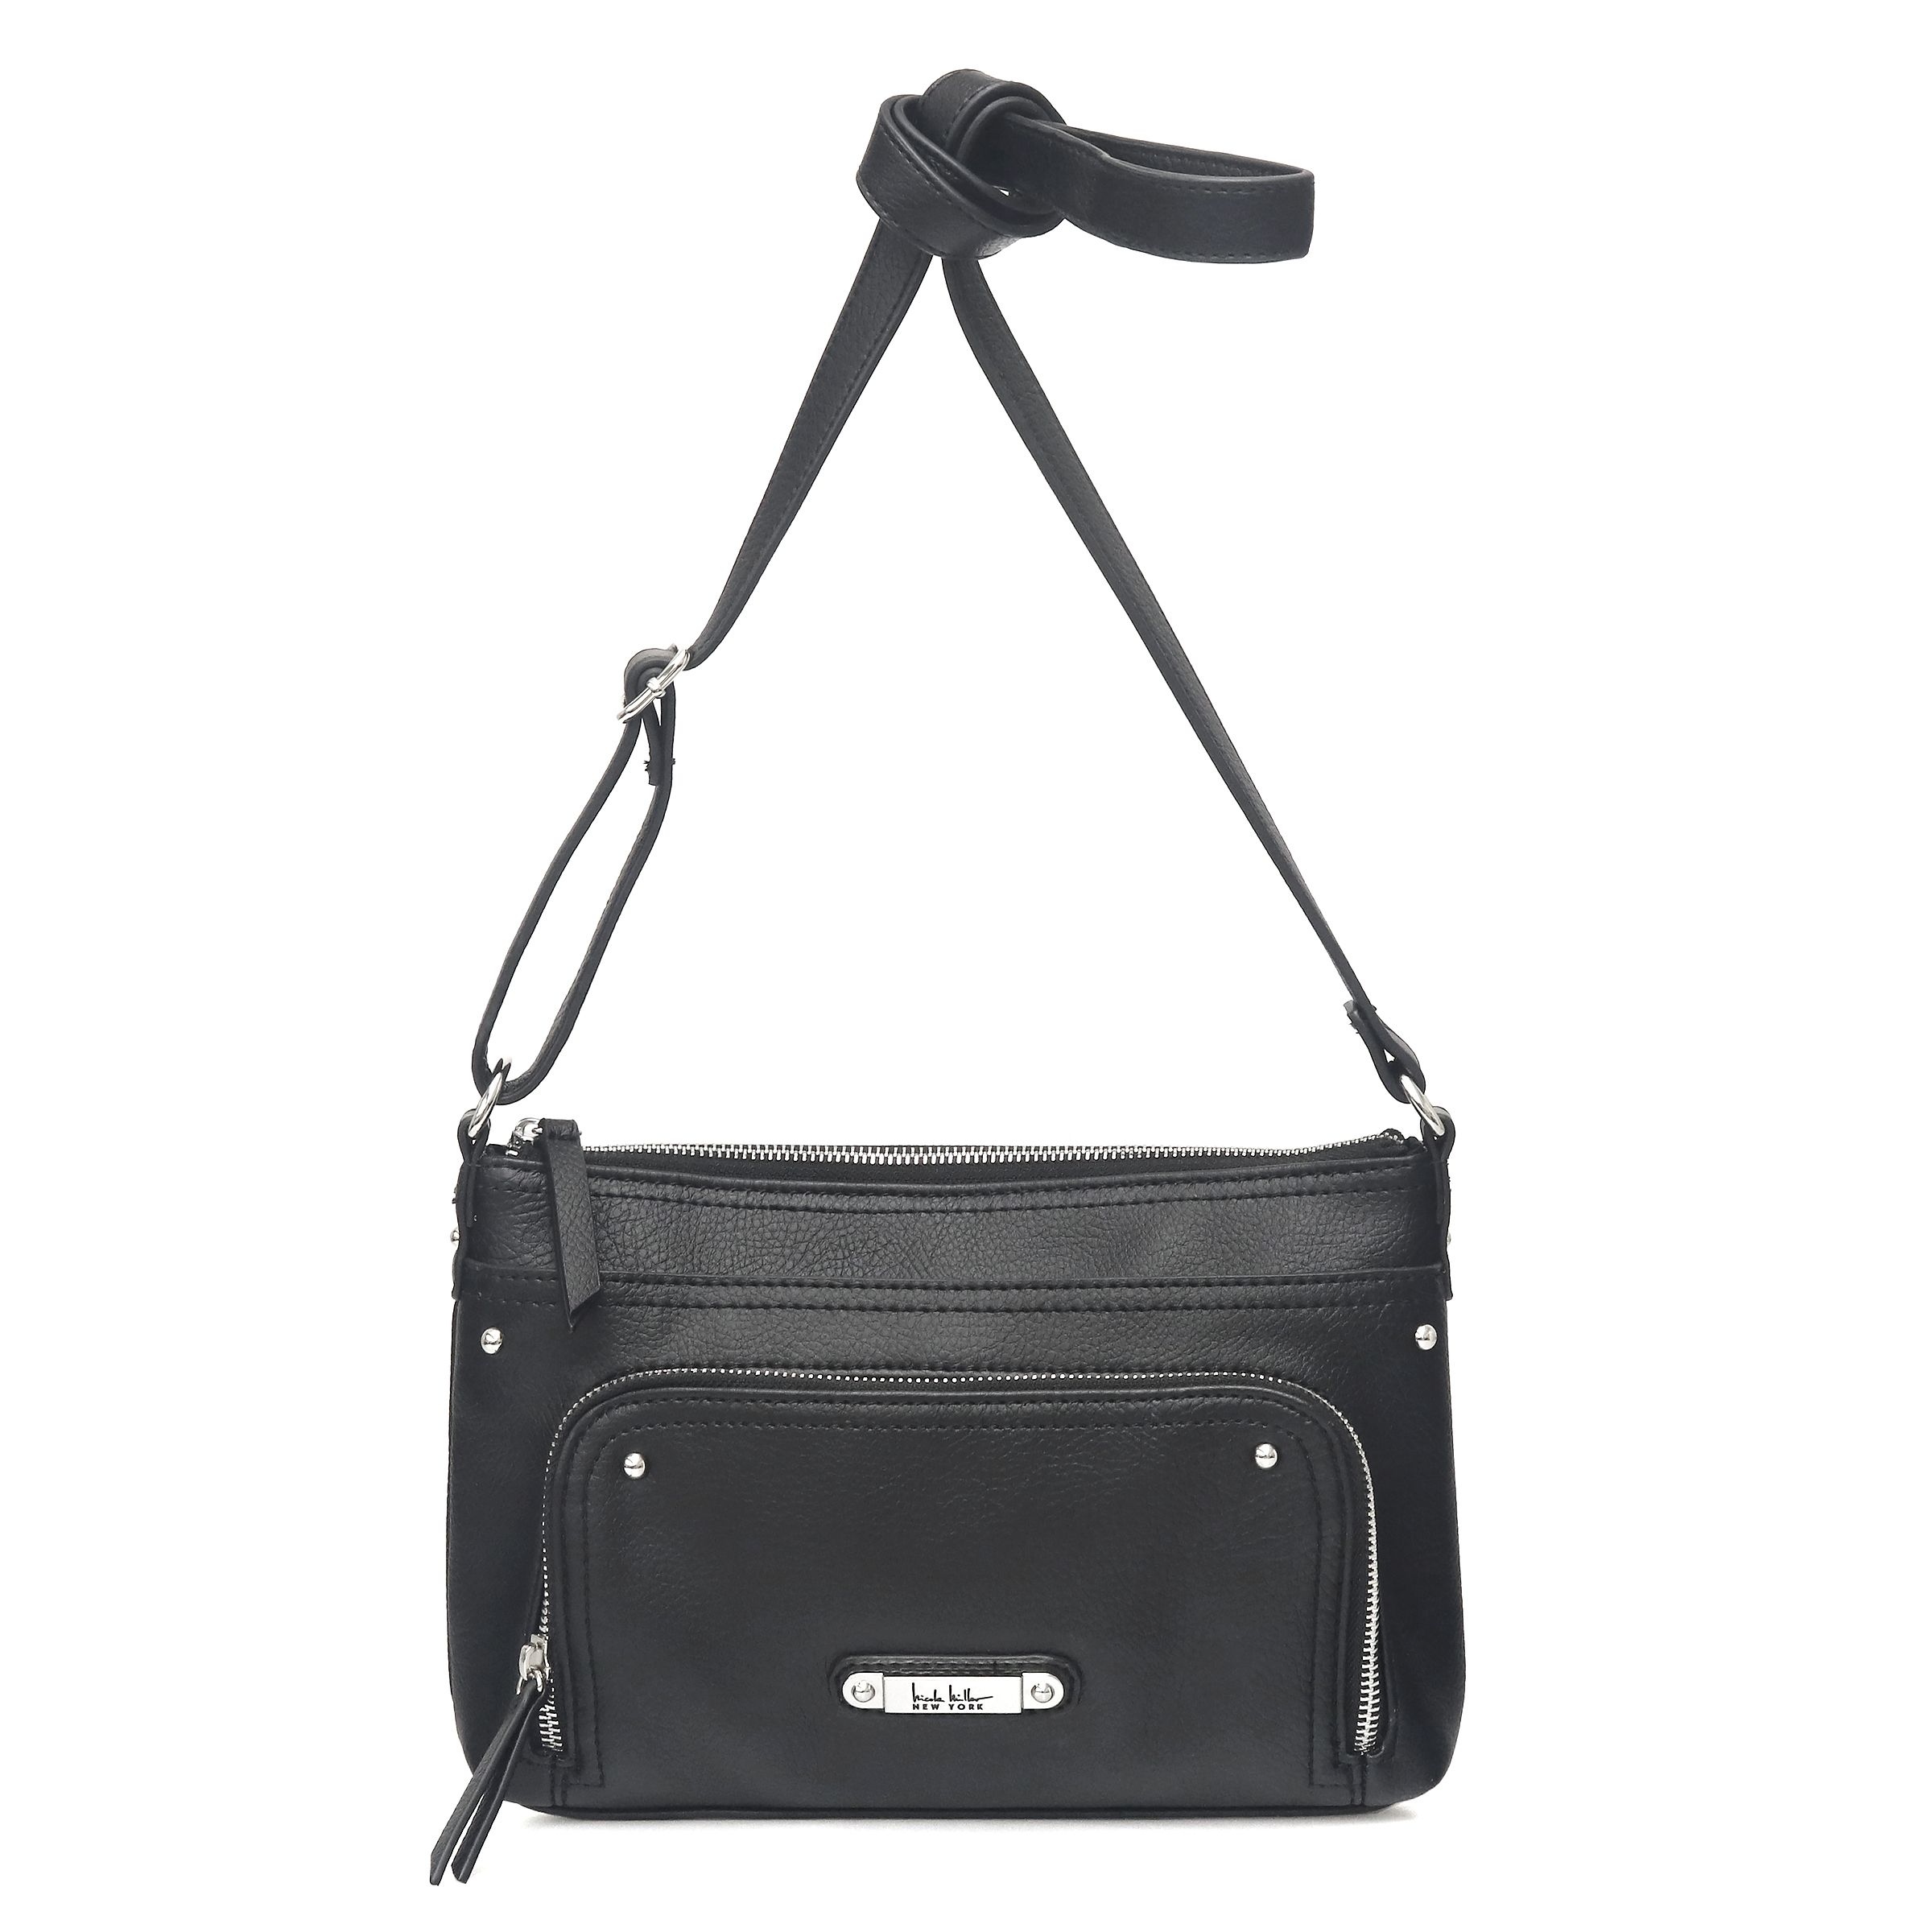 Nicole Miller Quilted Crossbody Shoulder Bag Os / Black Accessories Handbags